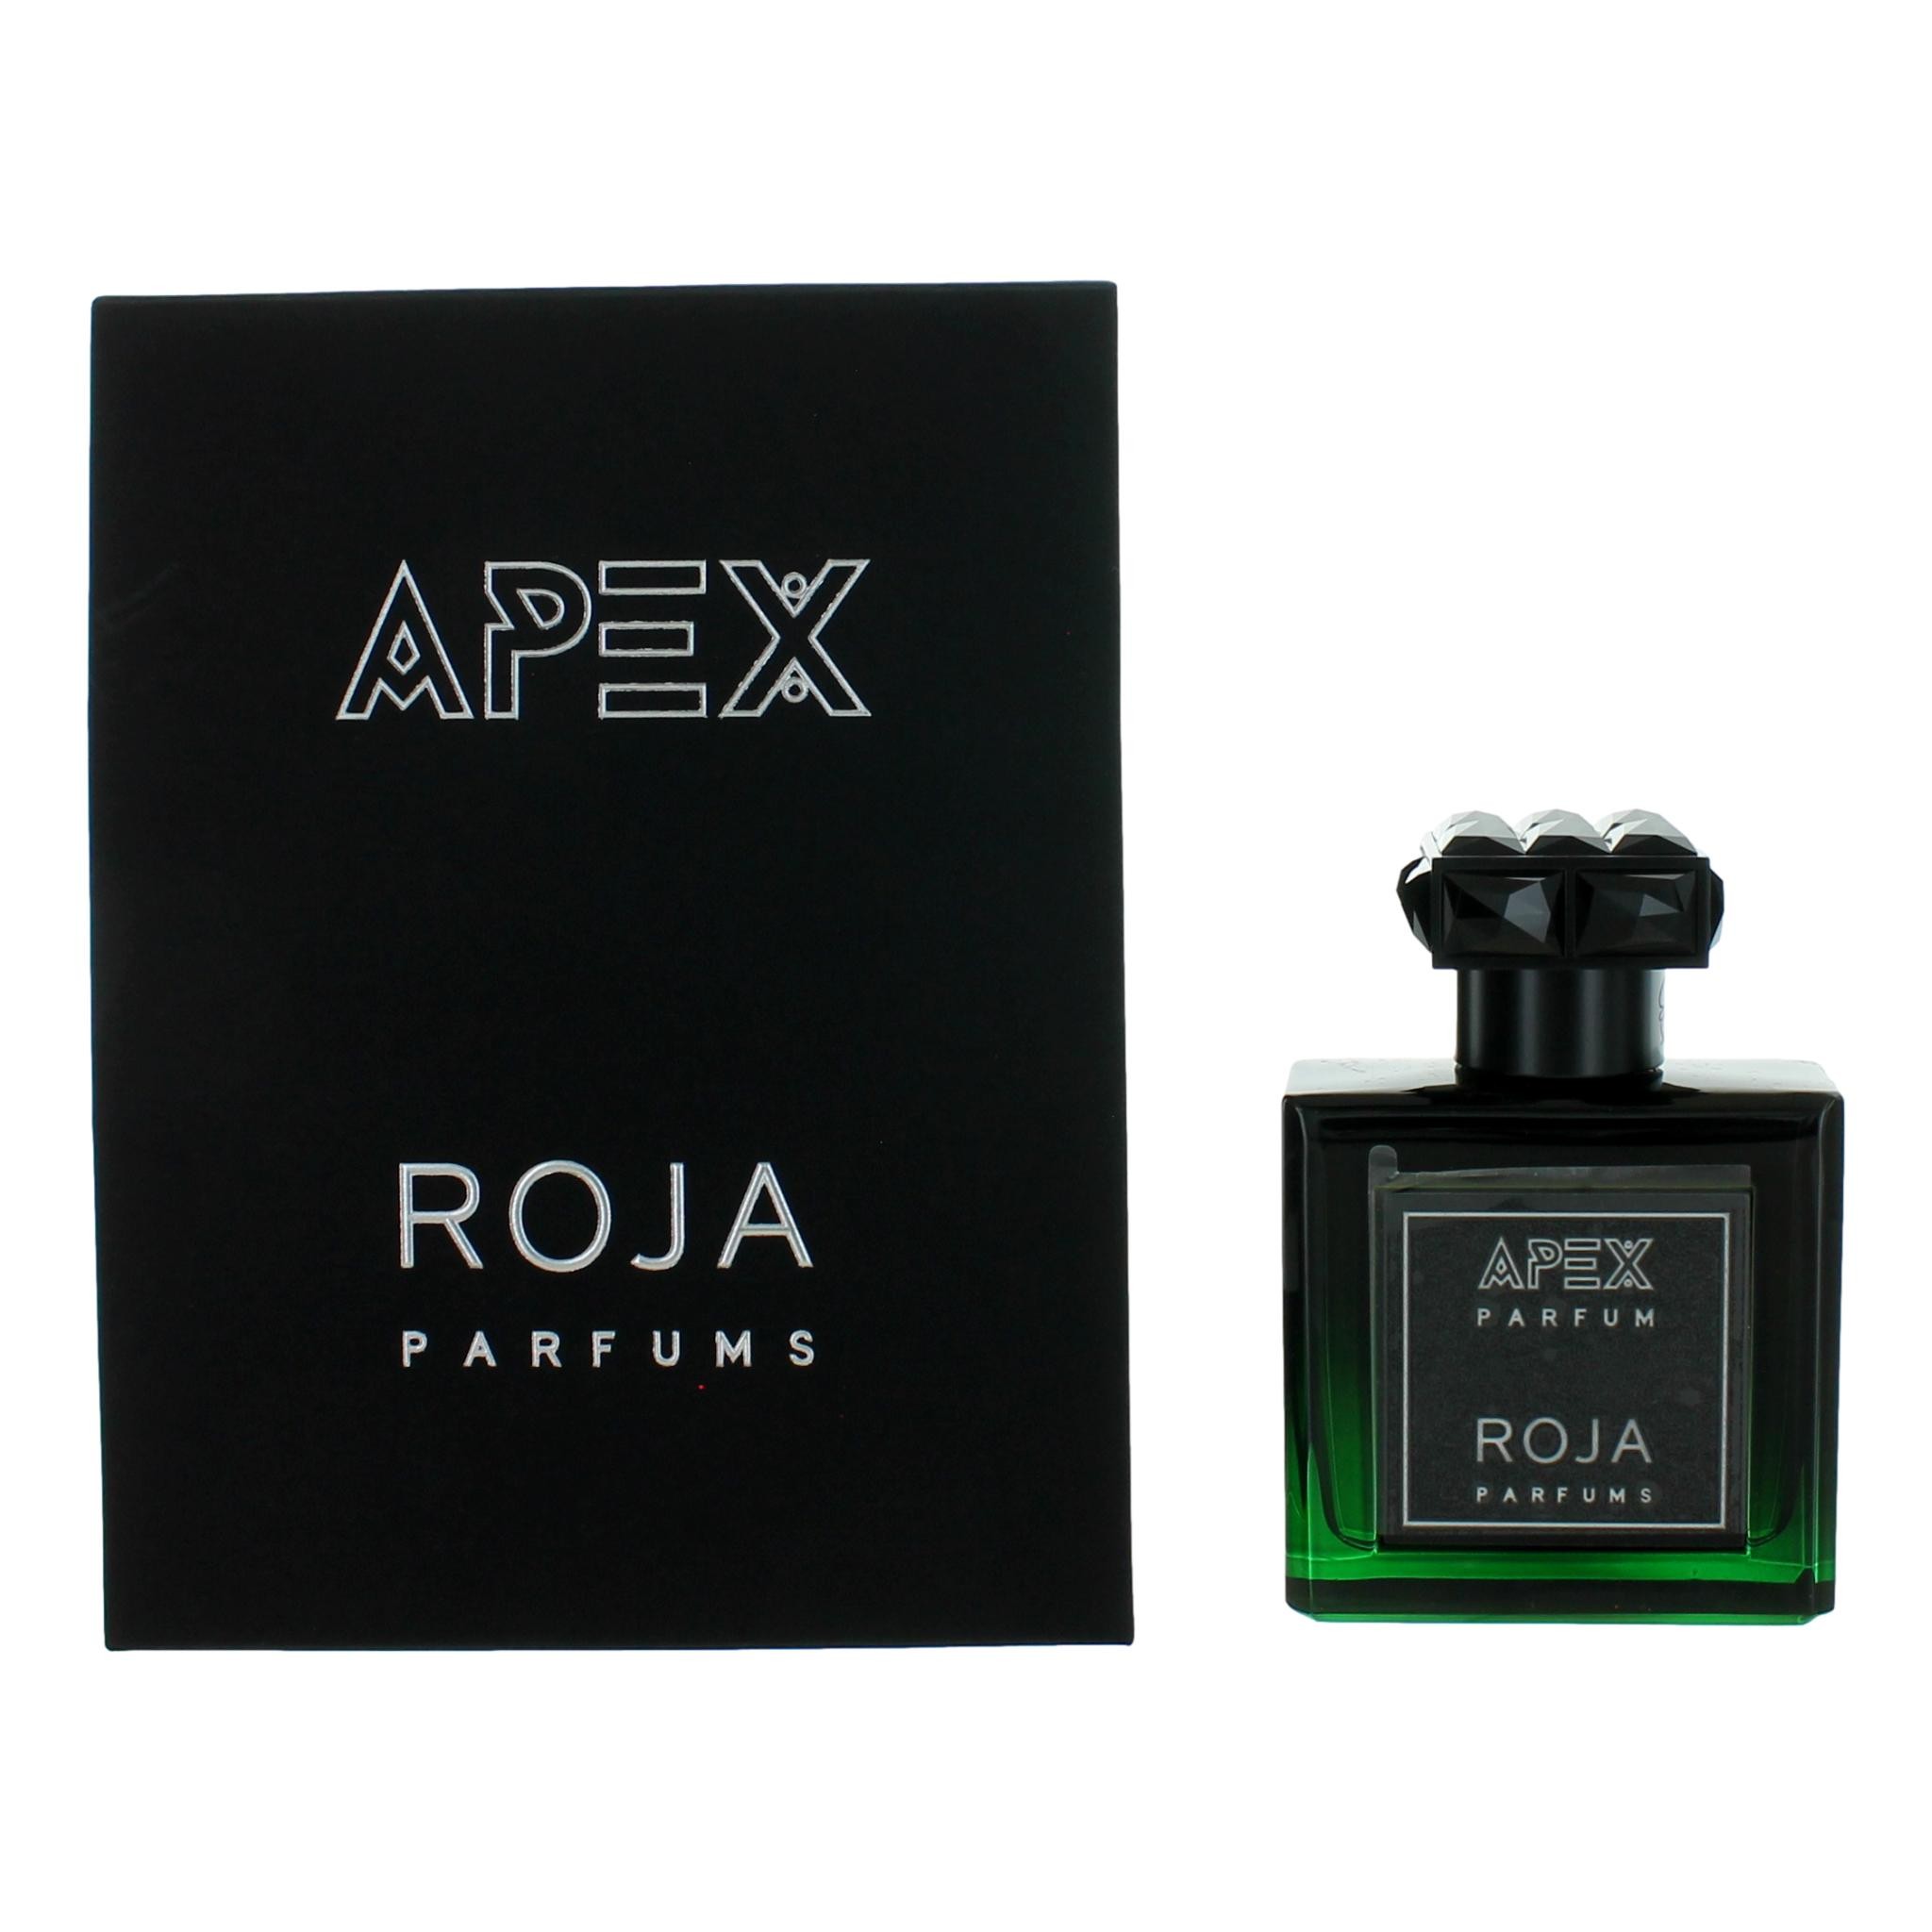 Apex by Roja Parfums 1.7 oz Parfum Spray for Men